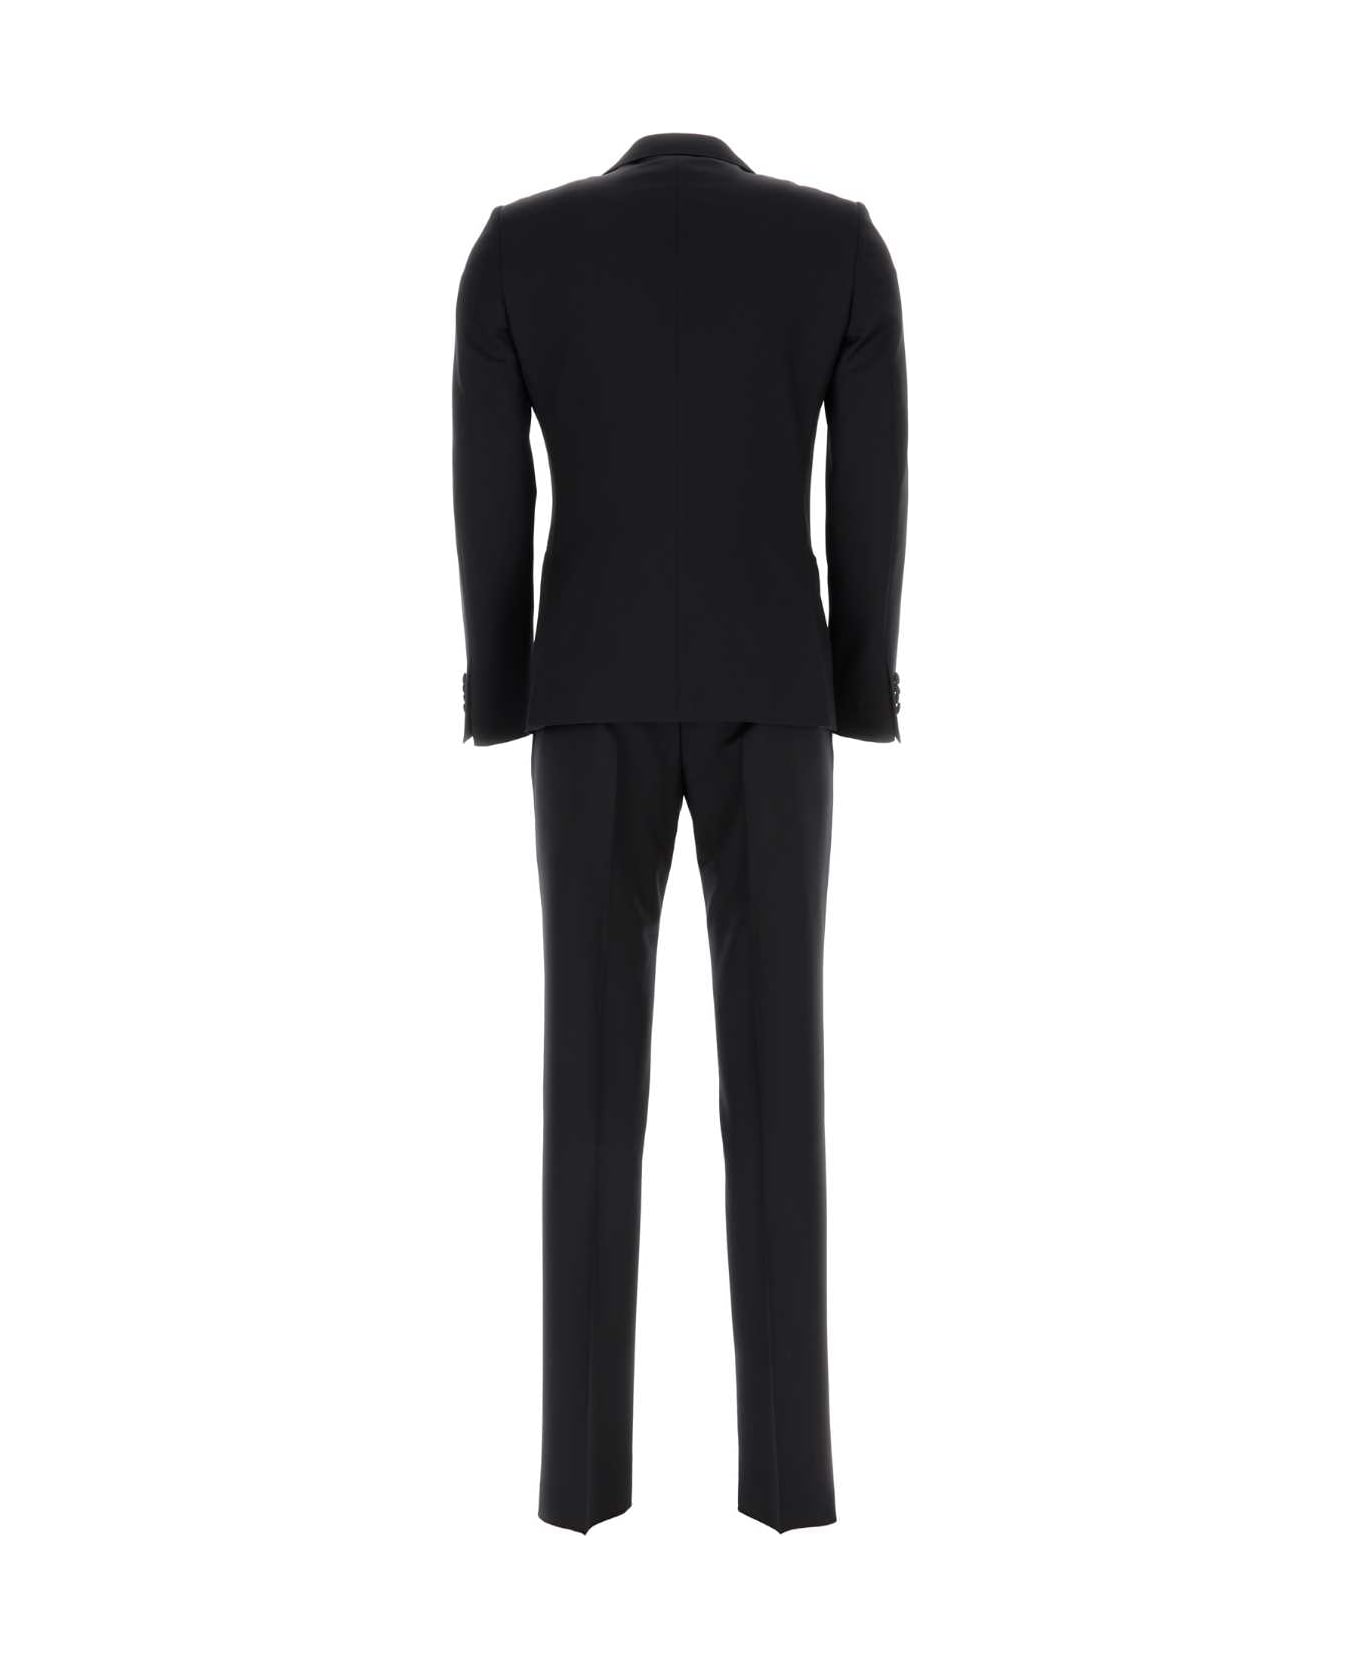 Zegna Midnight Blue Wool Blend Suit - 8R スーツ